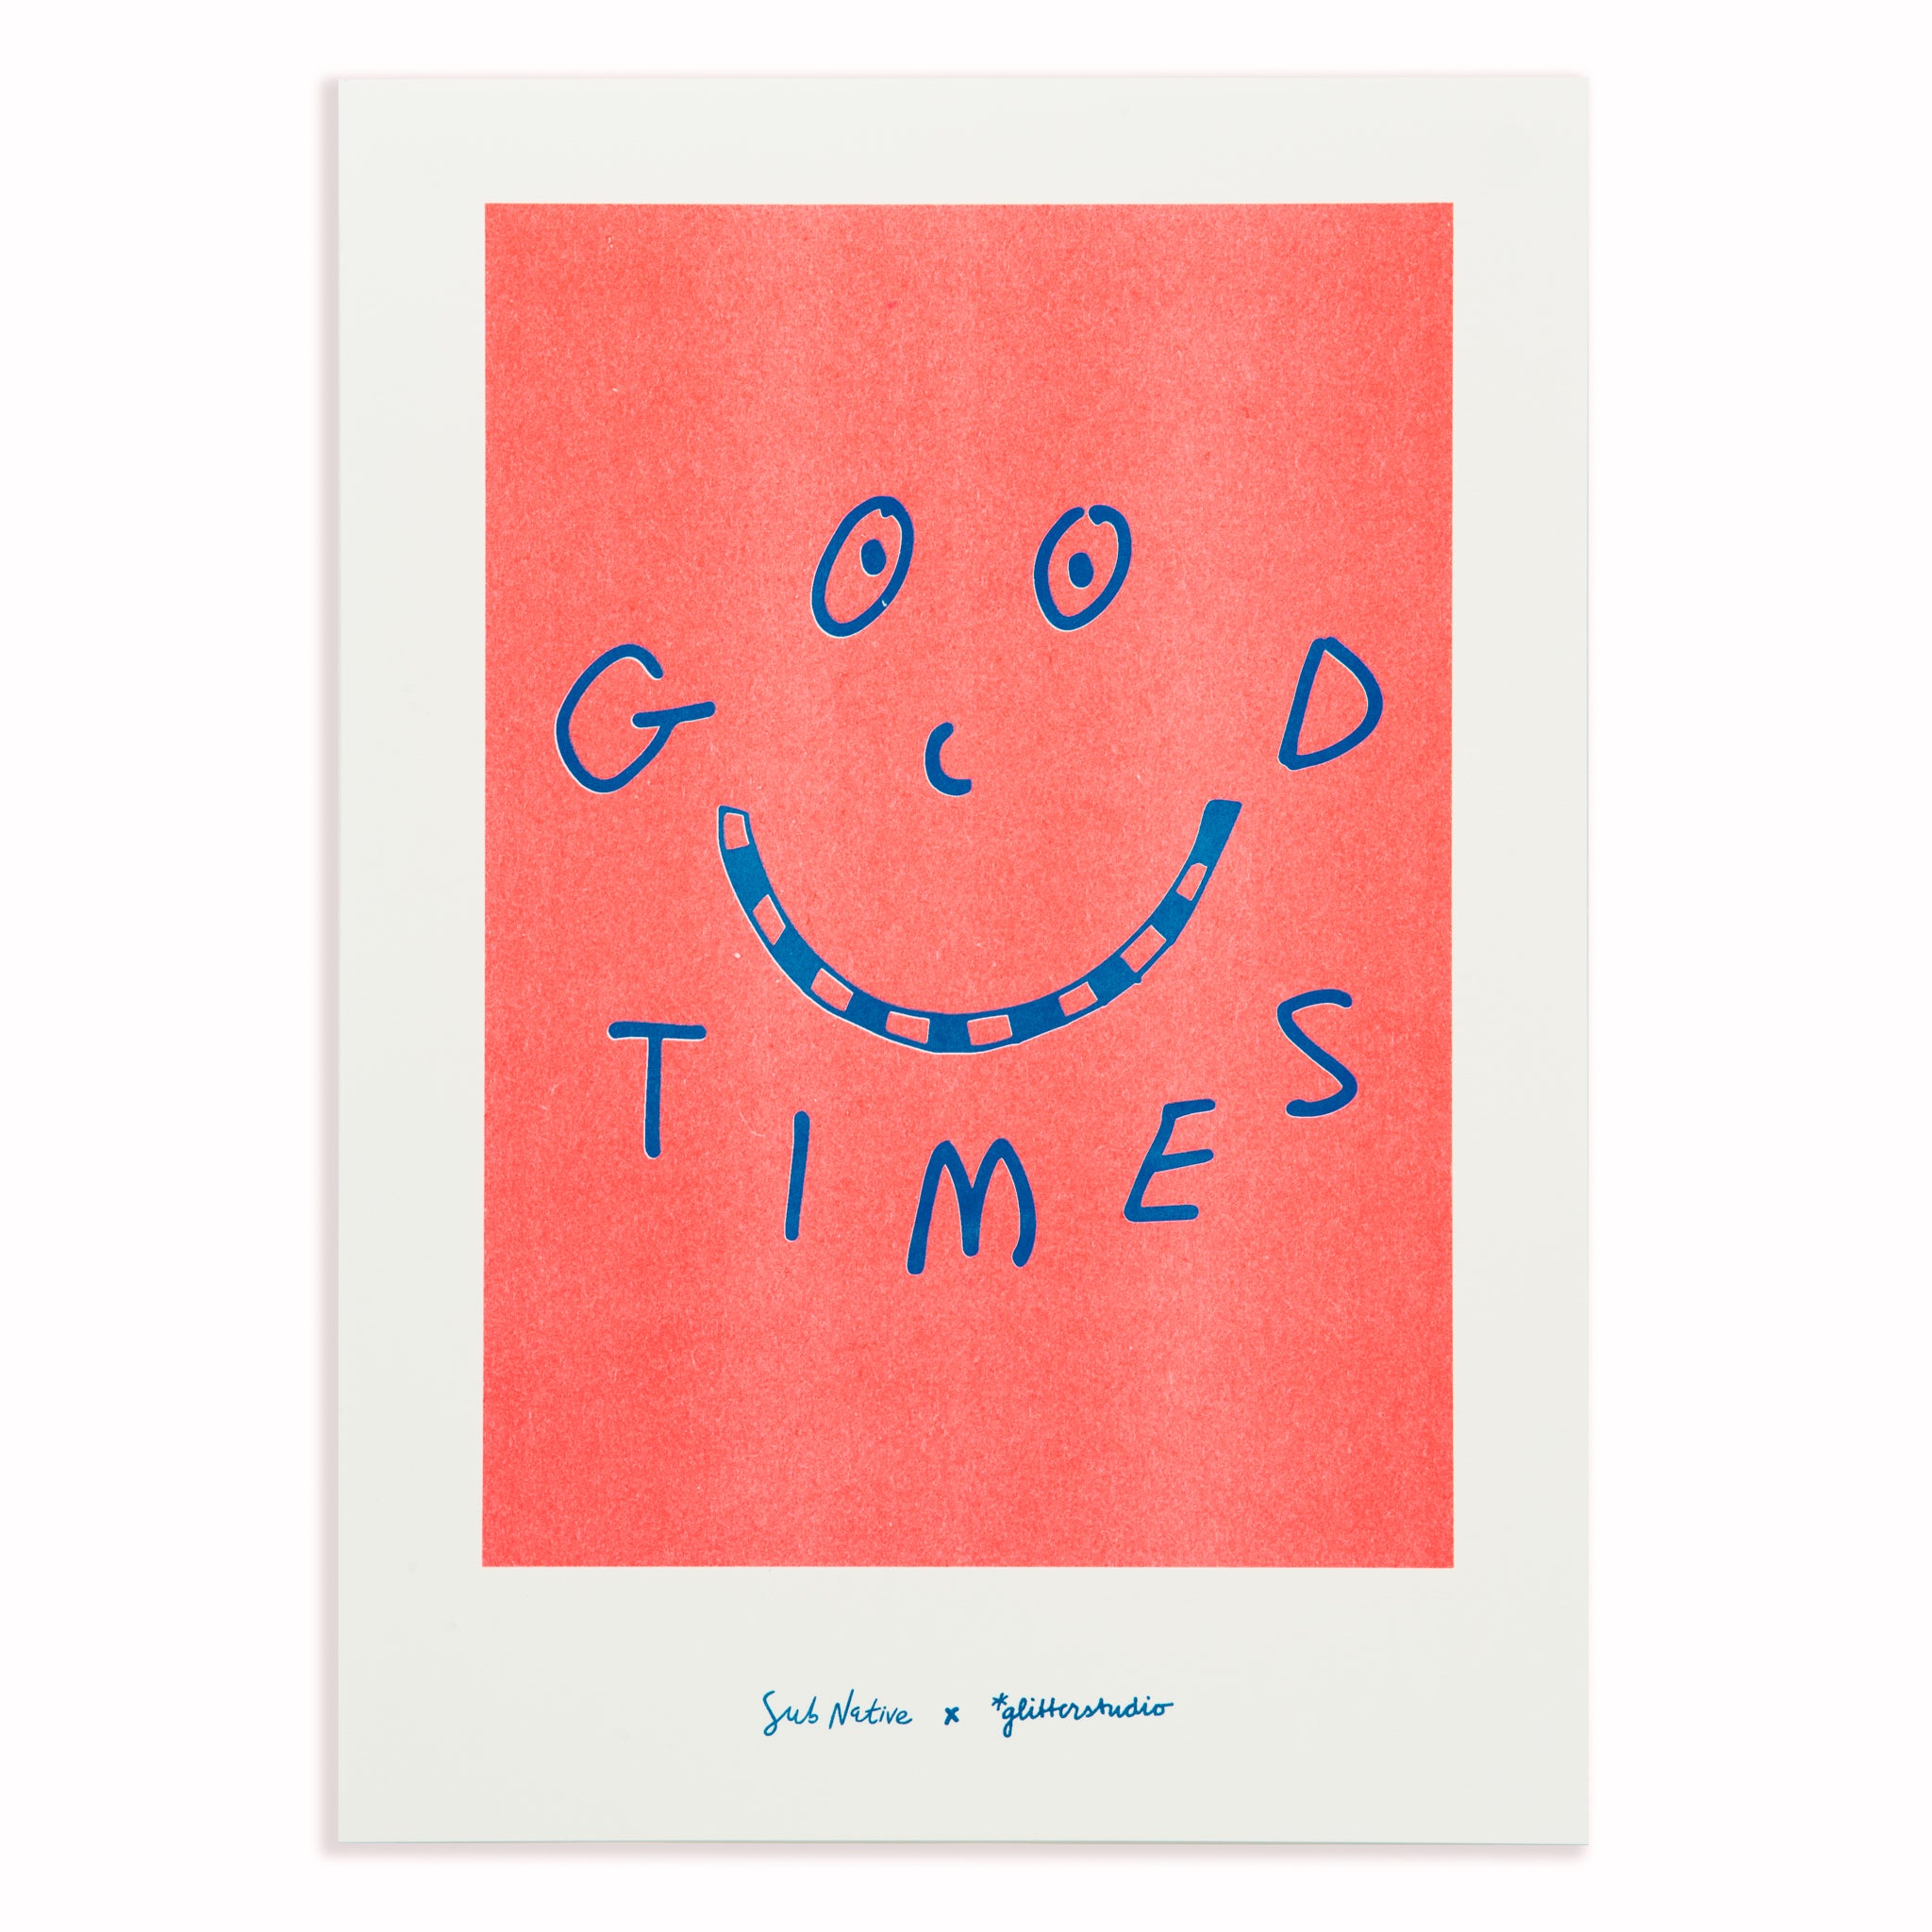 'Good Times' Sub Native X Glitterstudio A4 Risograph Print